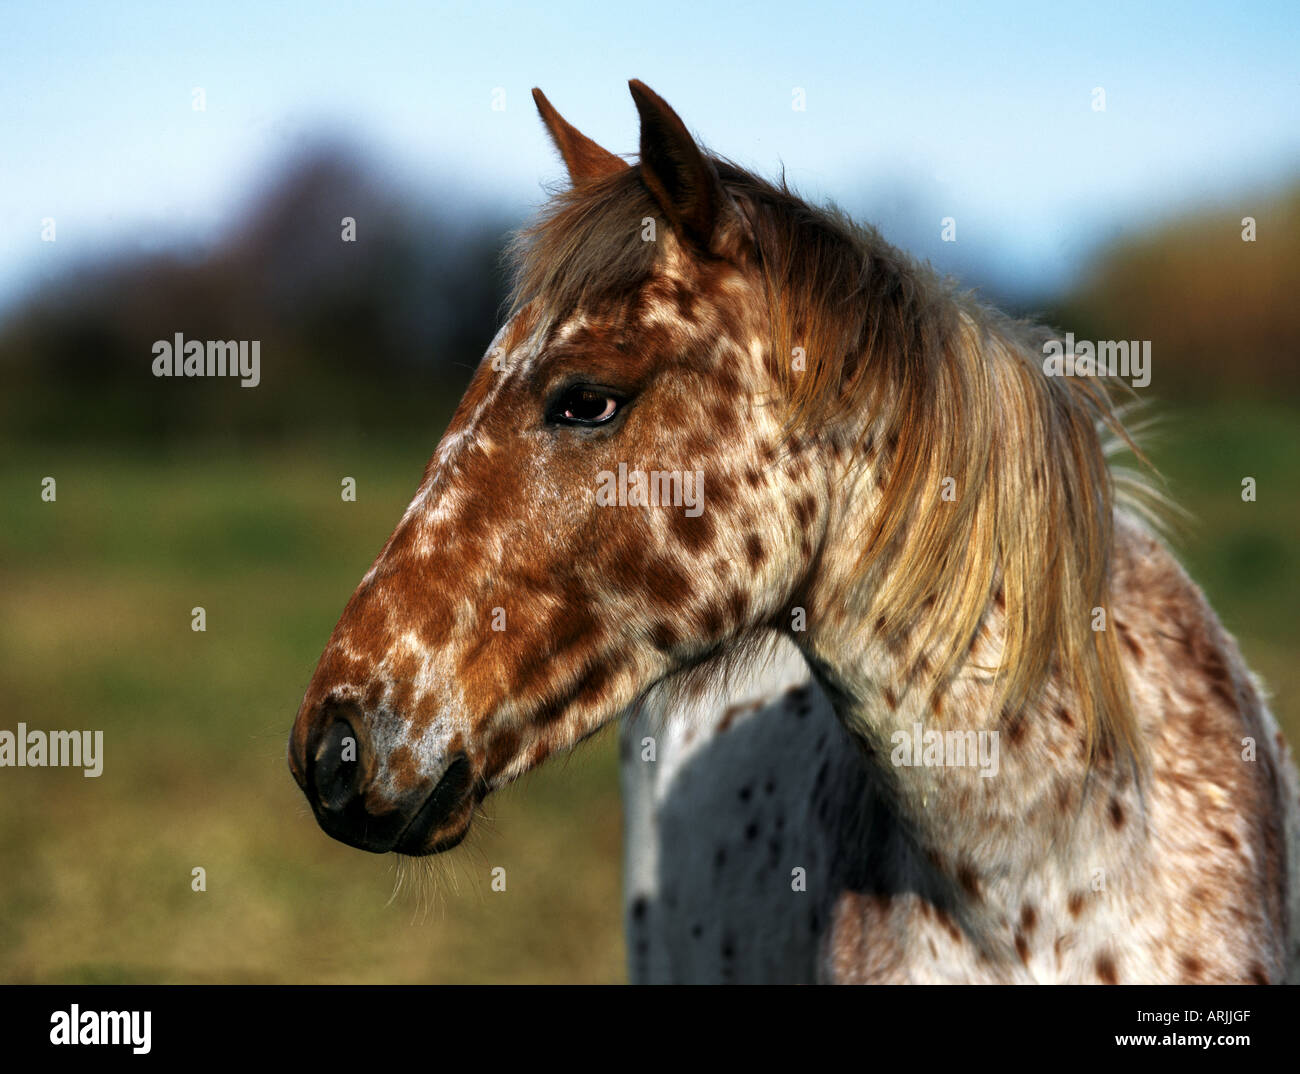 Appaloosa horse - portrait Stock Photo